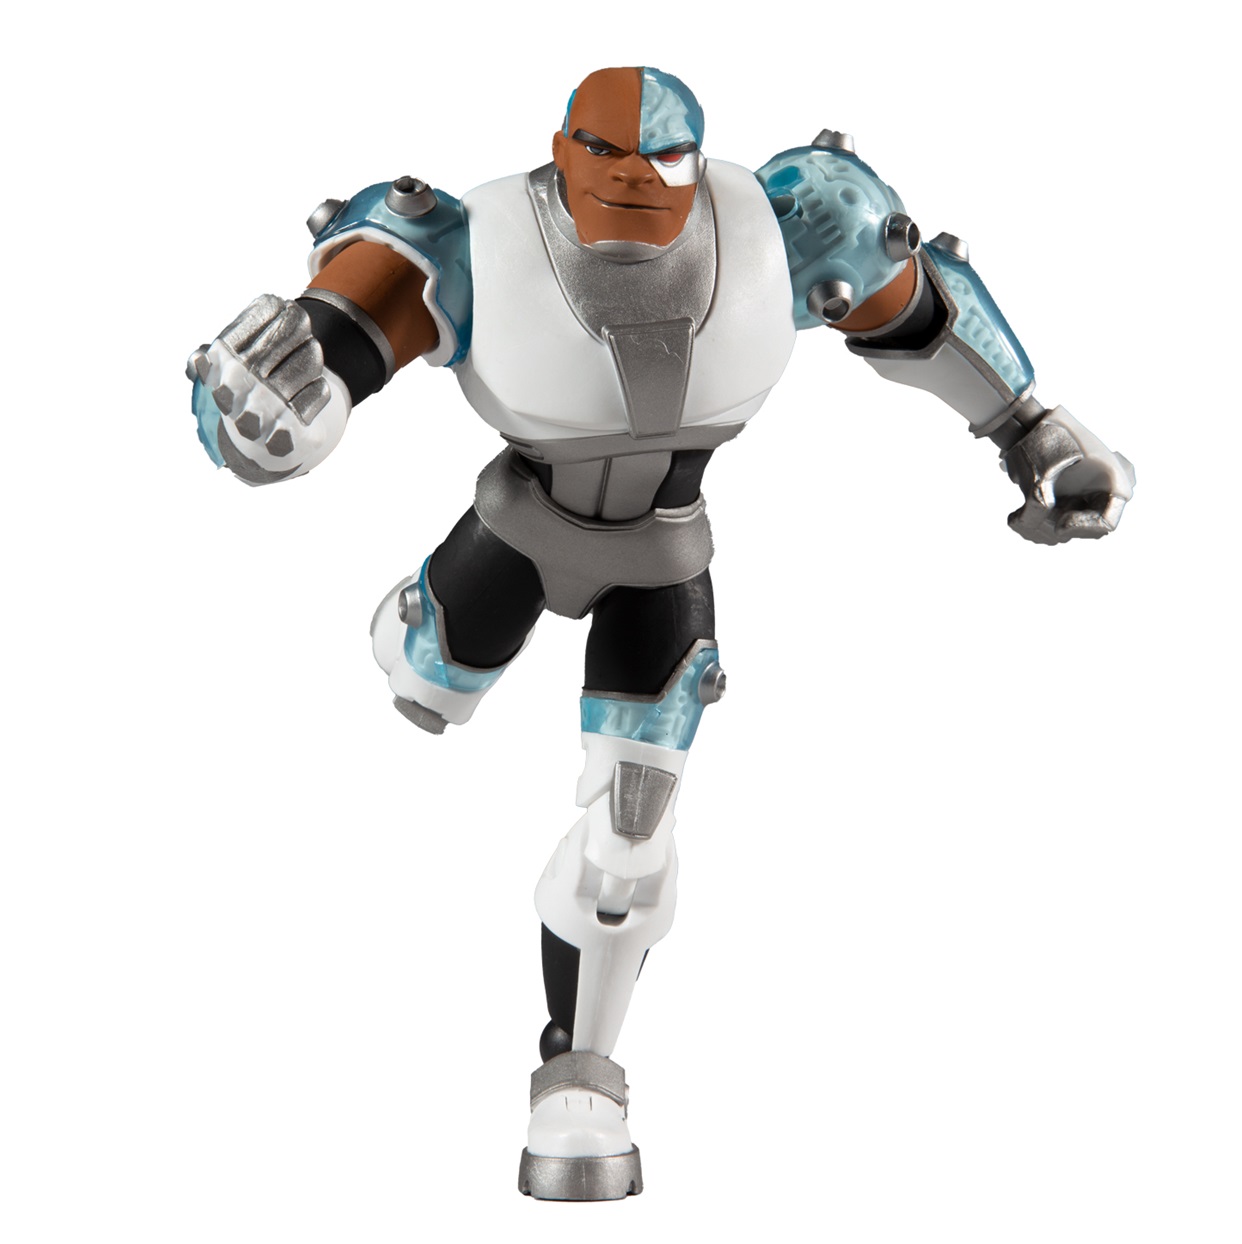 Cyborg Figura Teen Titans Multiverse Mc Farlane Toys 6 PuLG